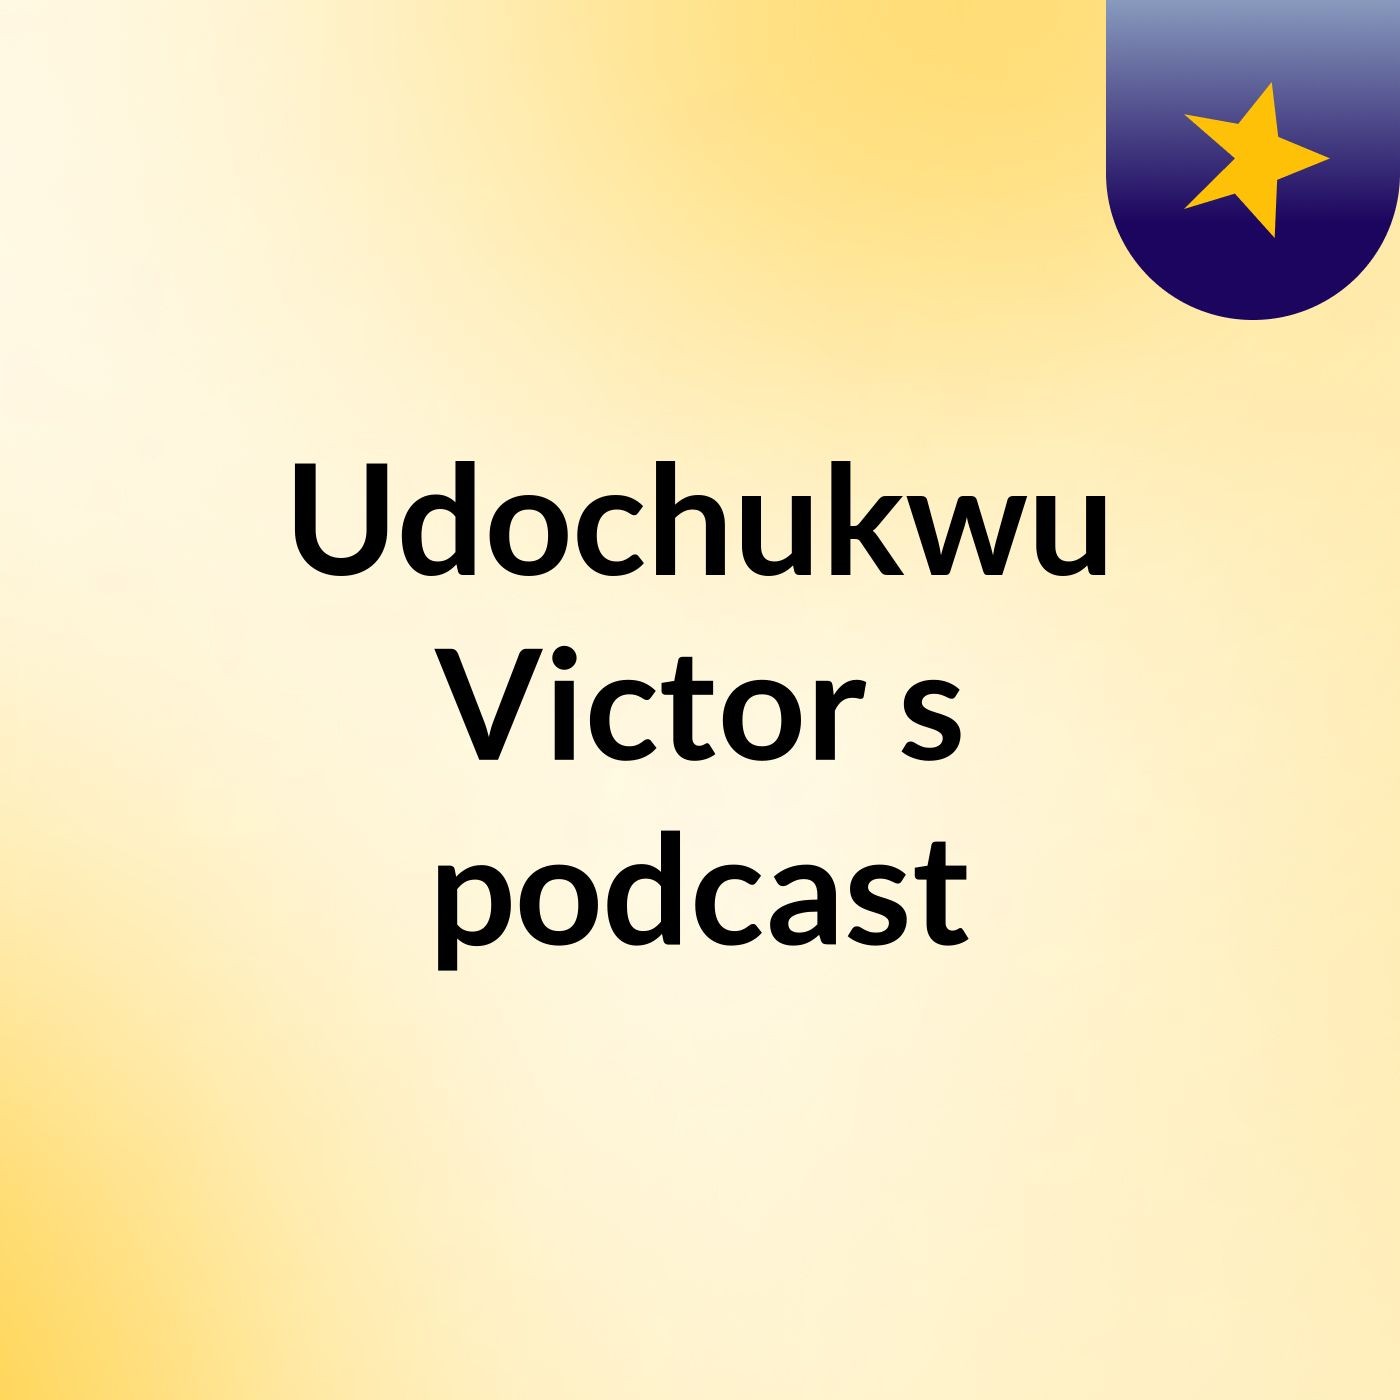 Udochukwu Victor's podcast